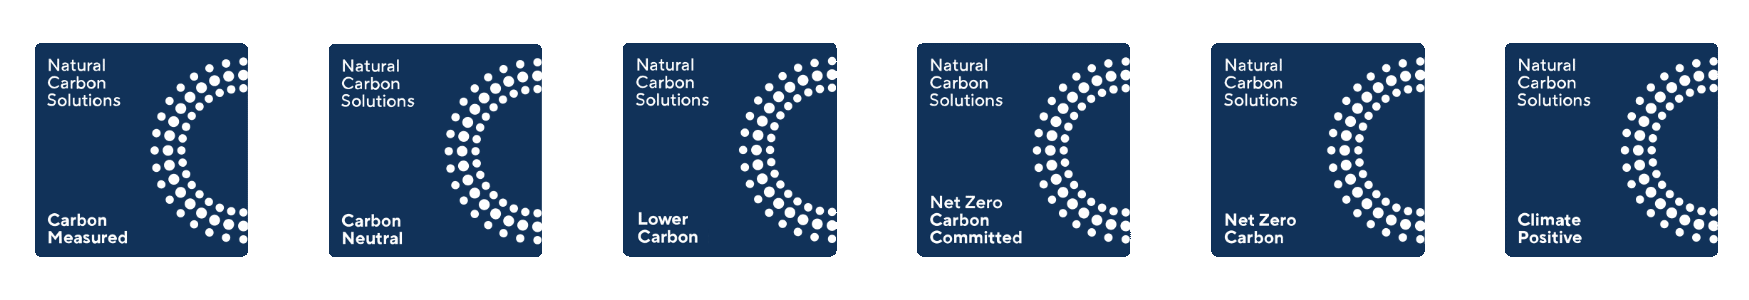 Natural Carbon Solutions Labels